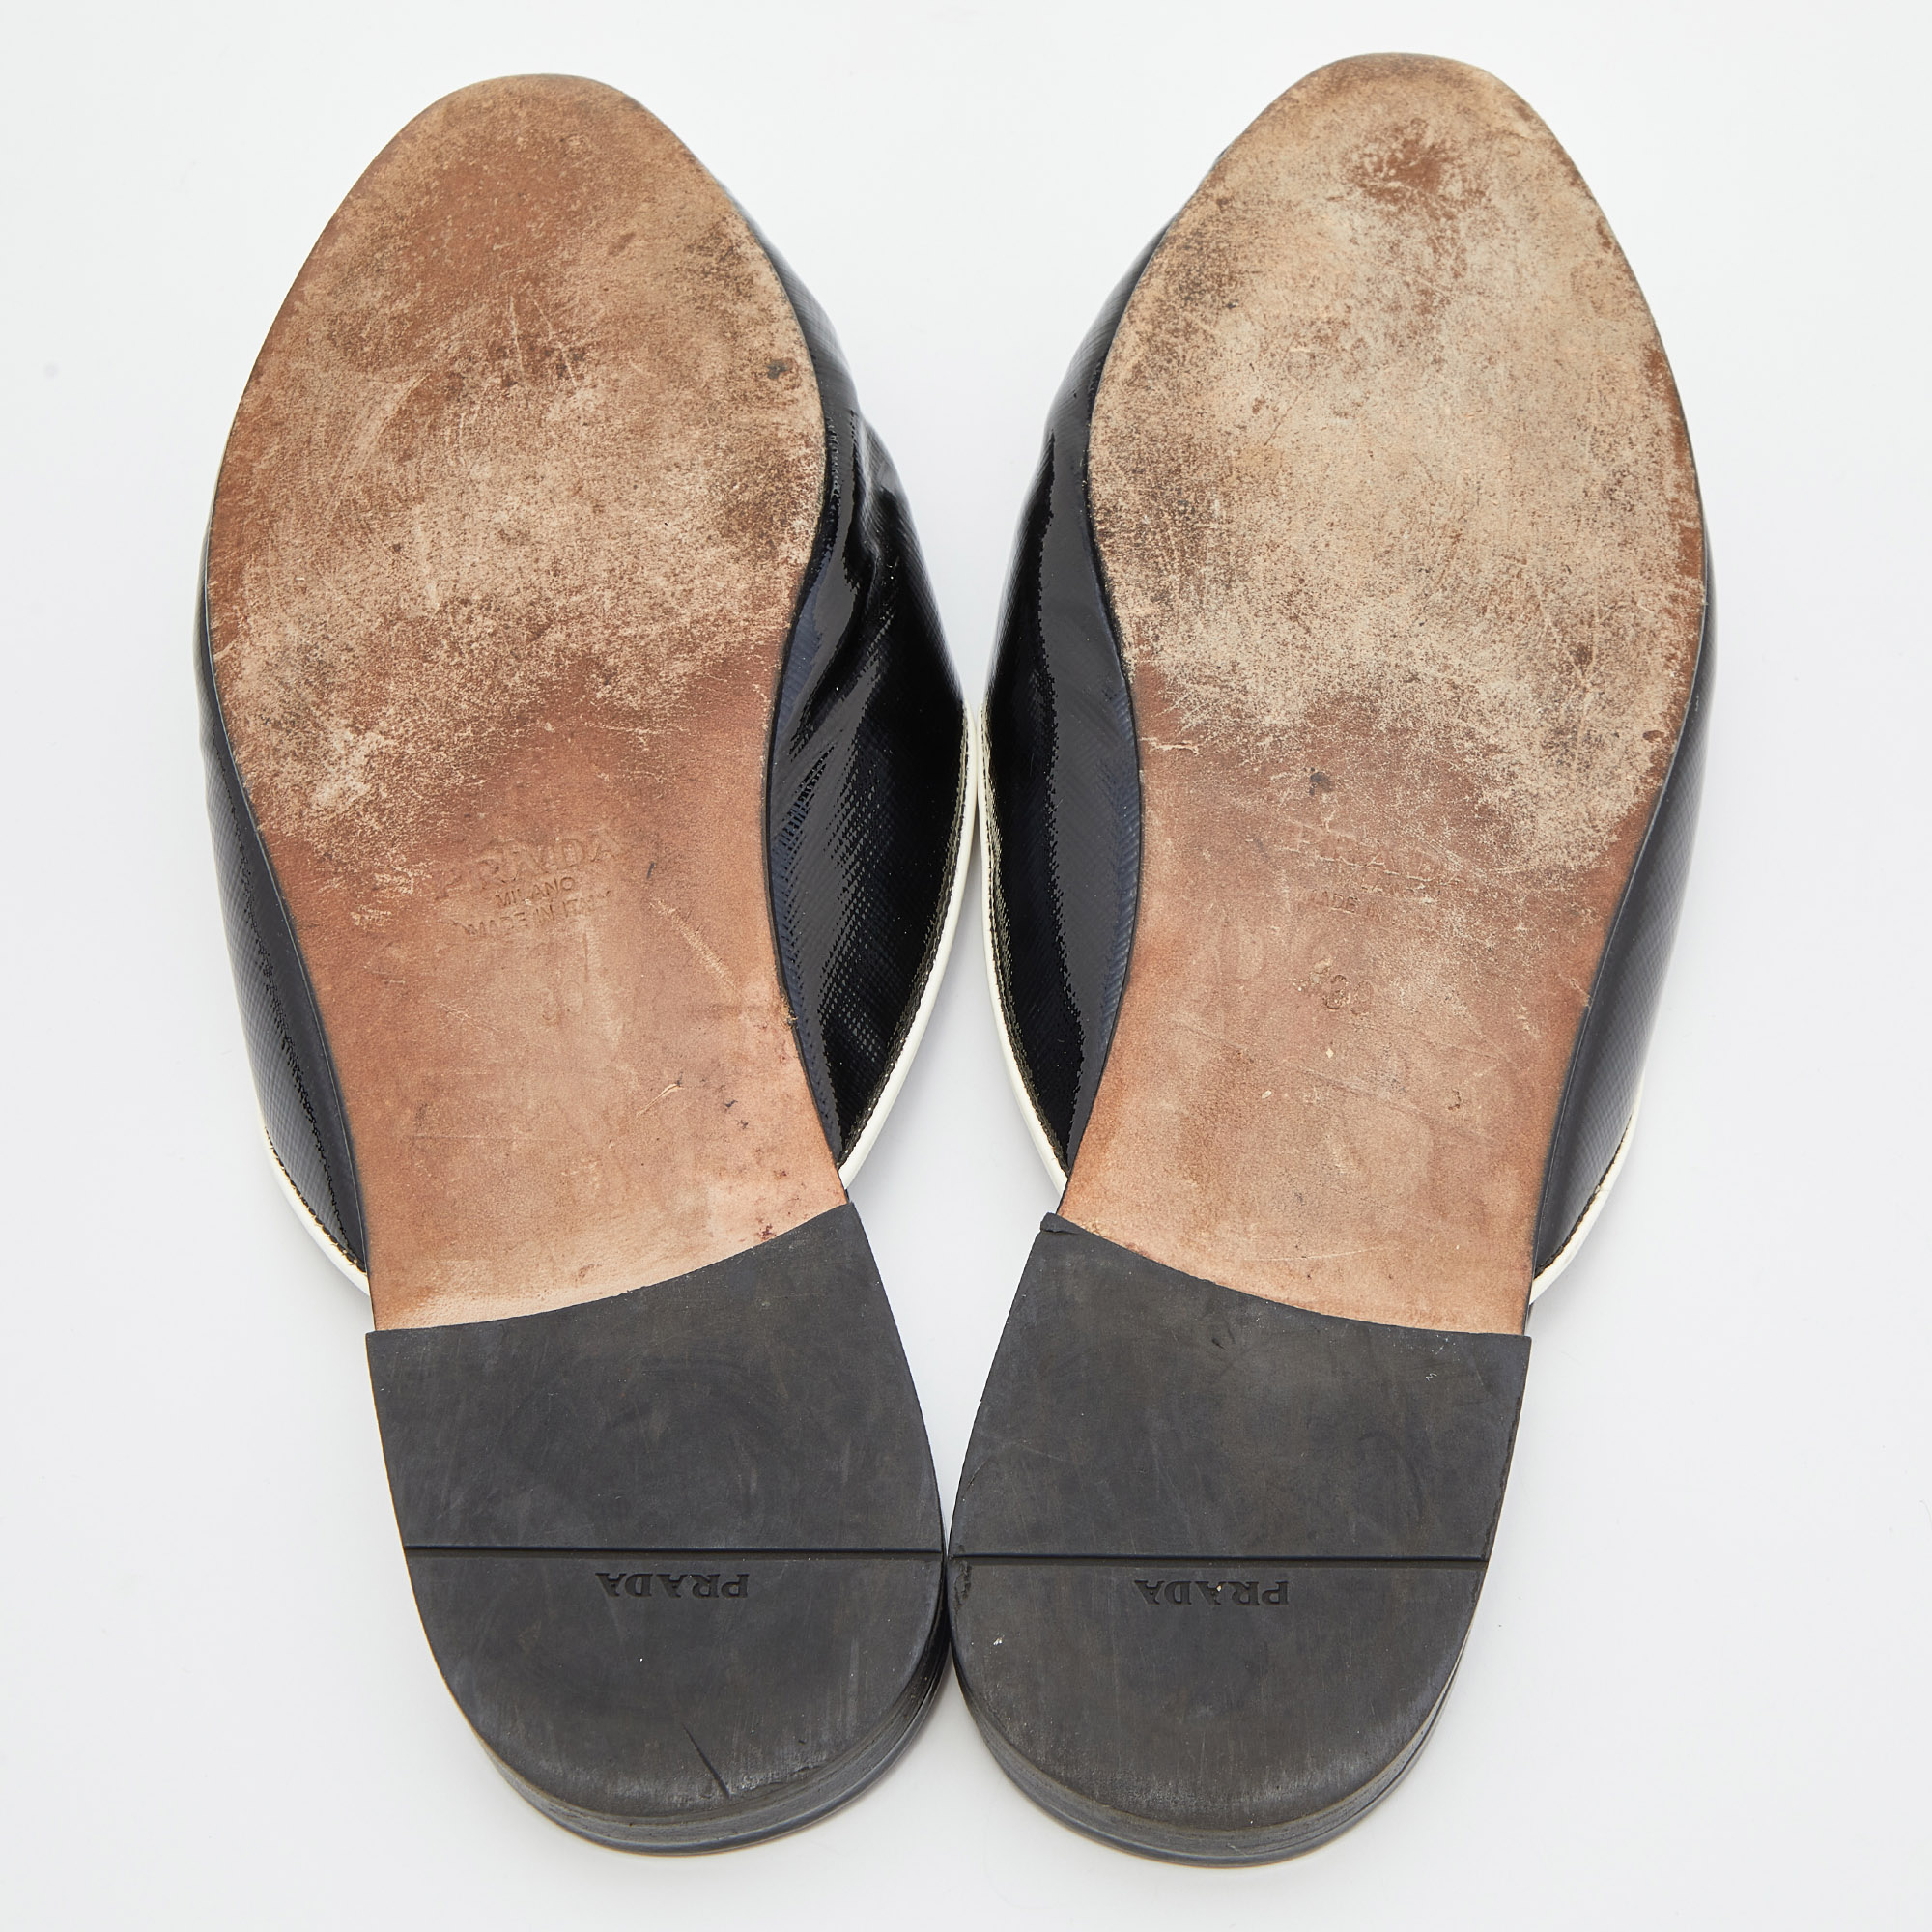 Prada Black Patent Leather Flat Mules Size 39